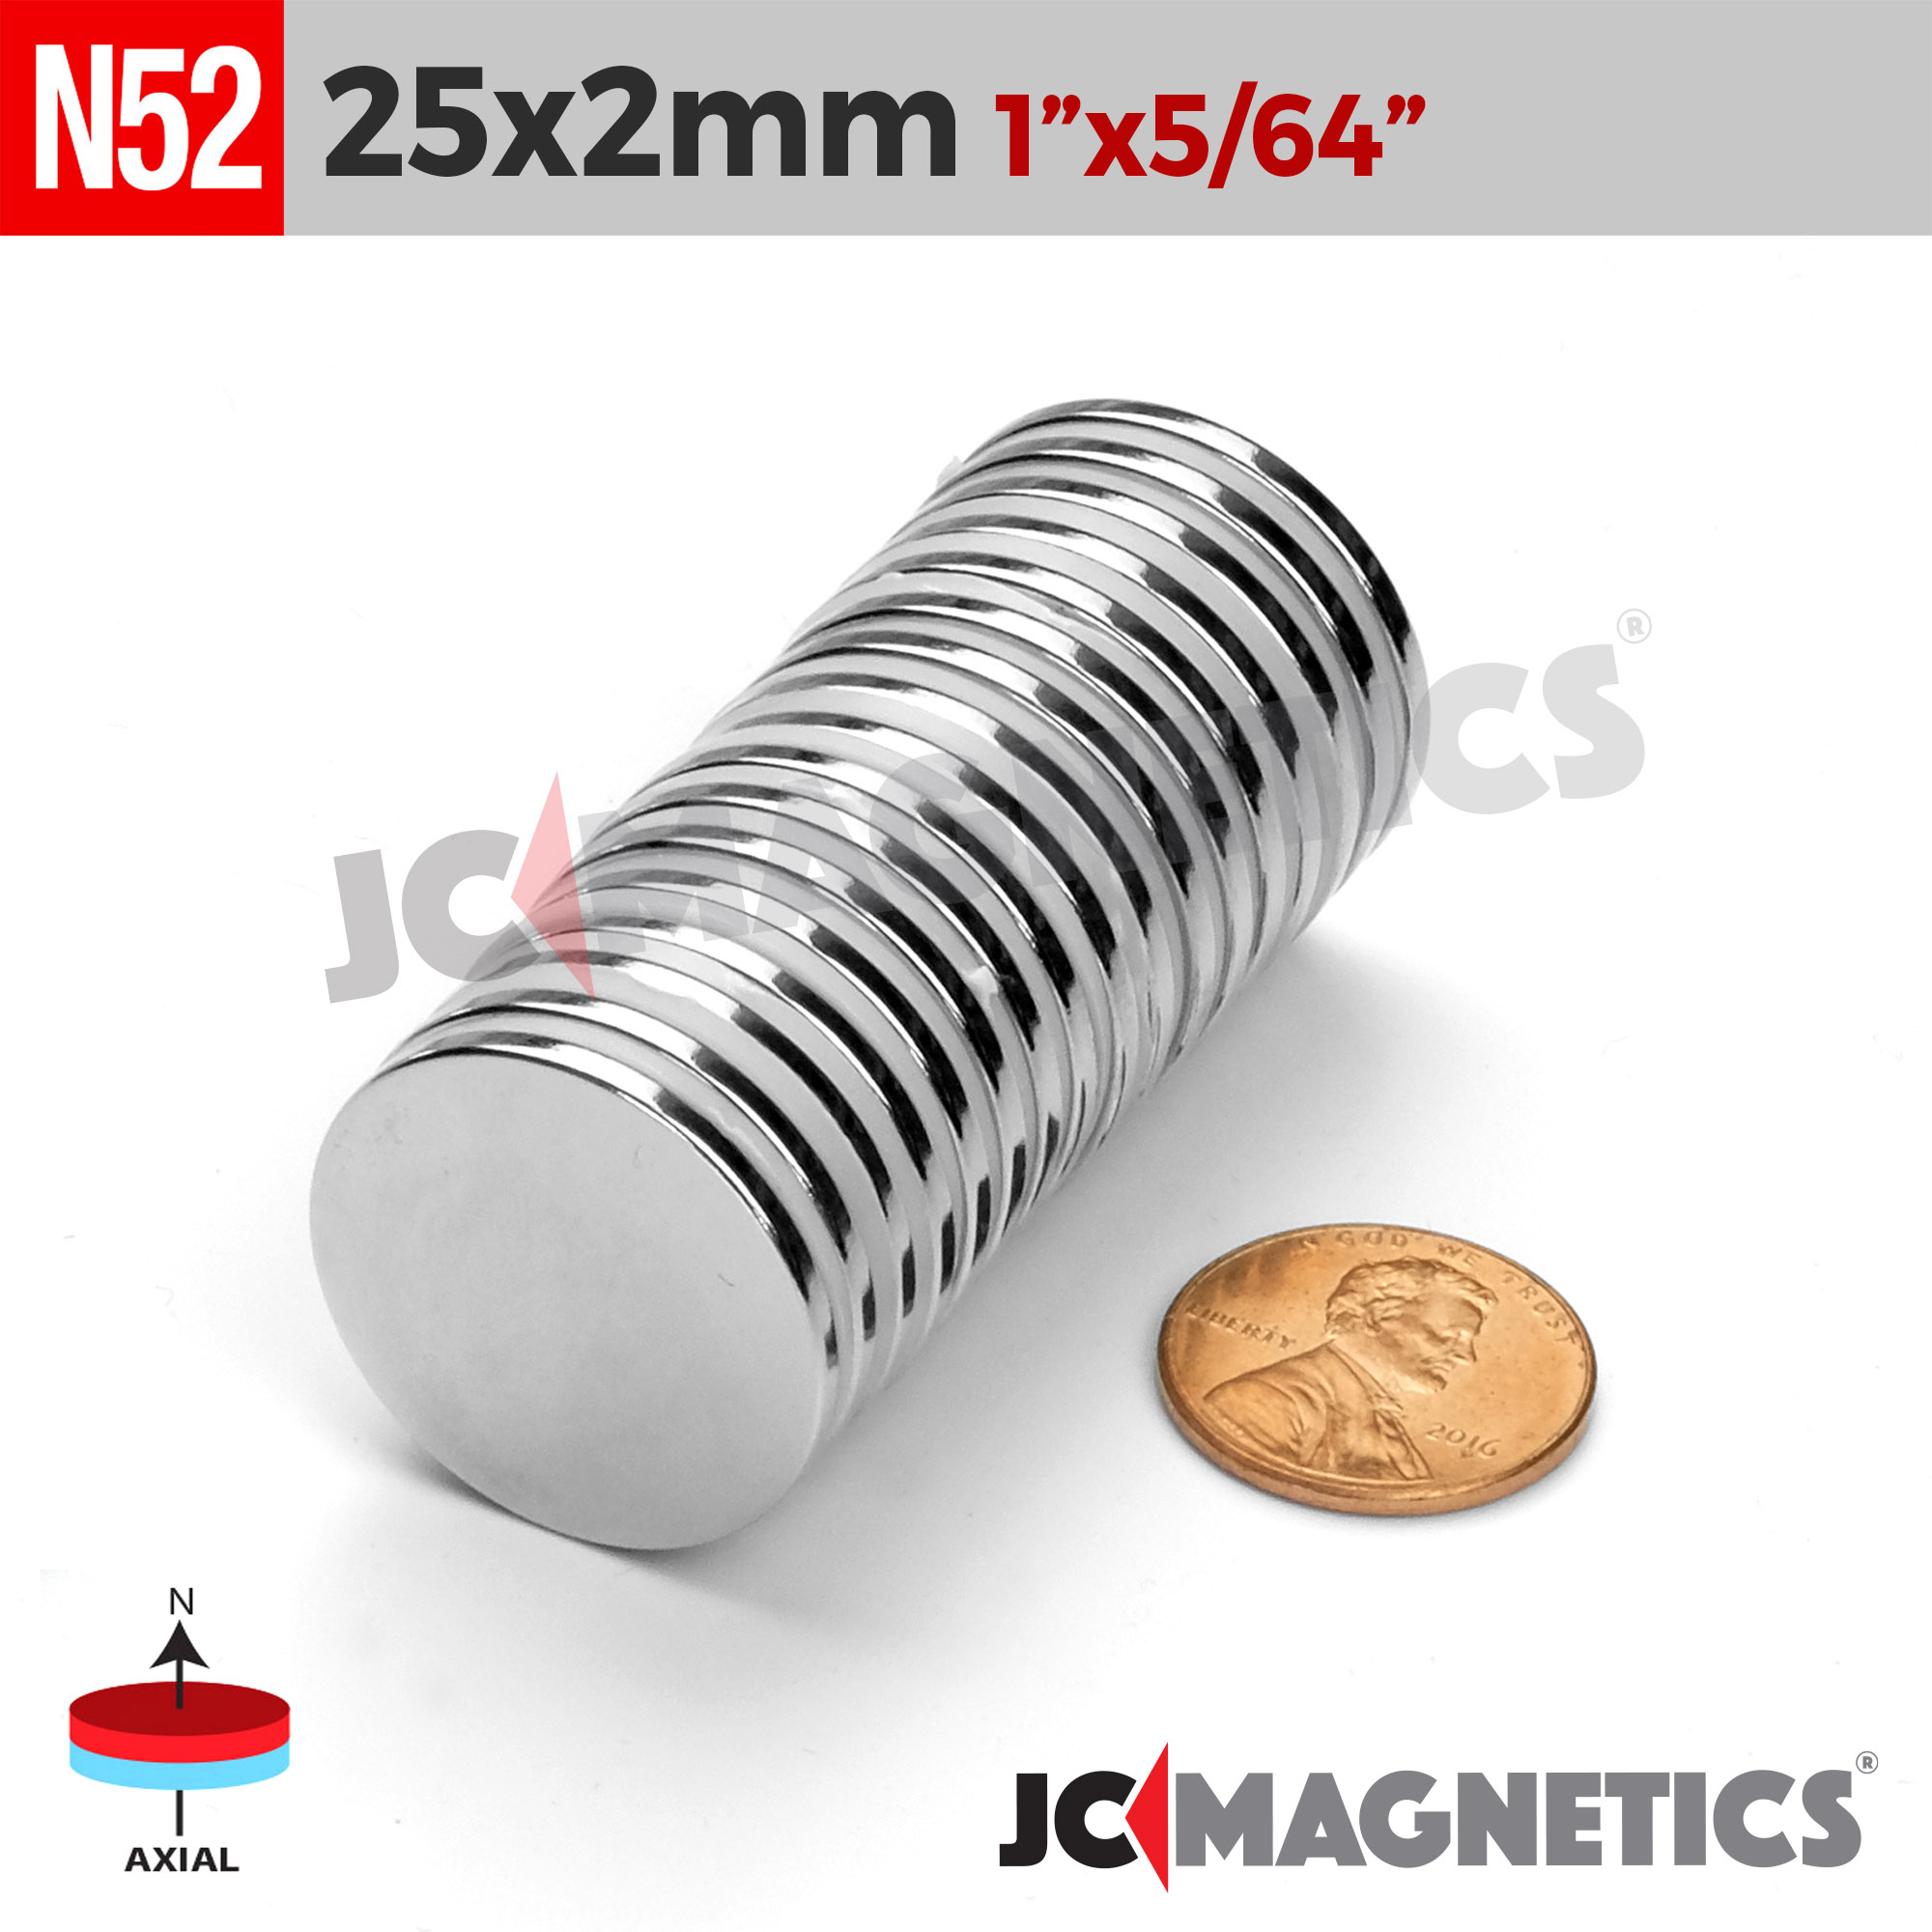 D61G-N52 - Neodymium Disc Magnet